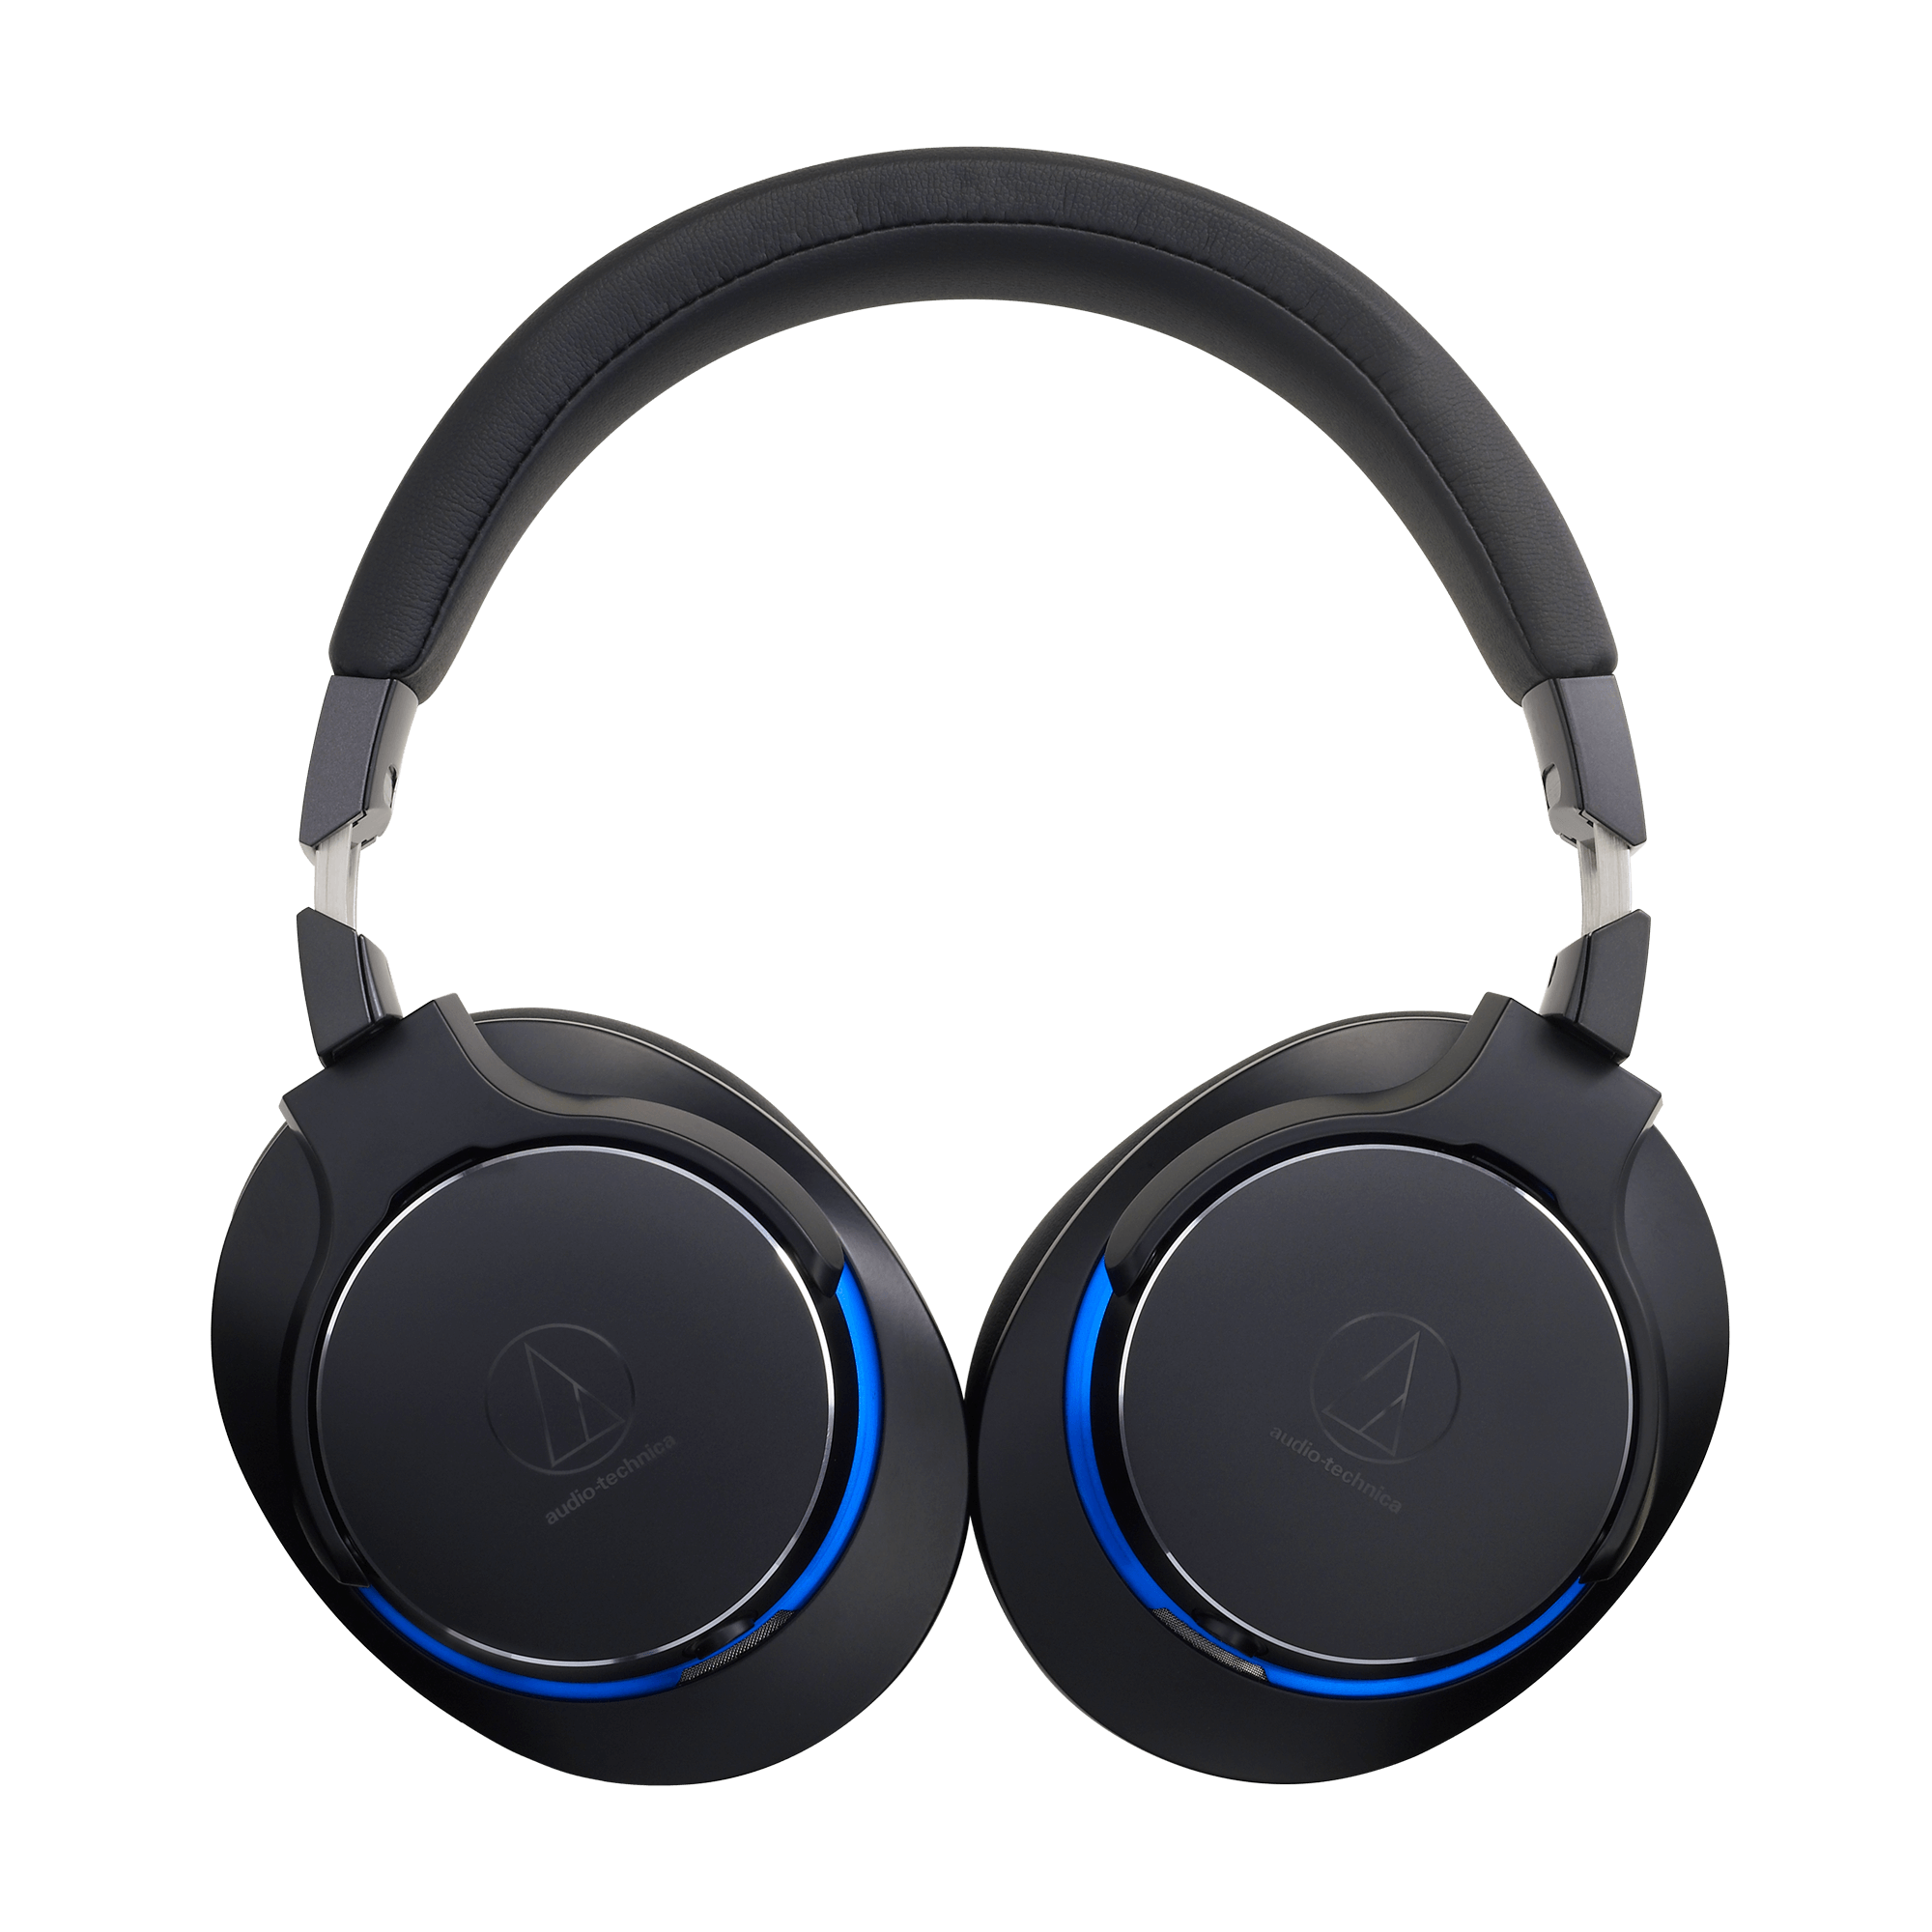 Audio Technica MSR7b High-Resolution Portable Headphones